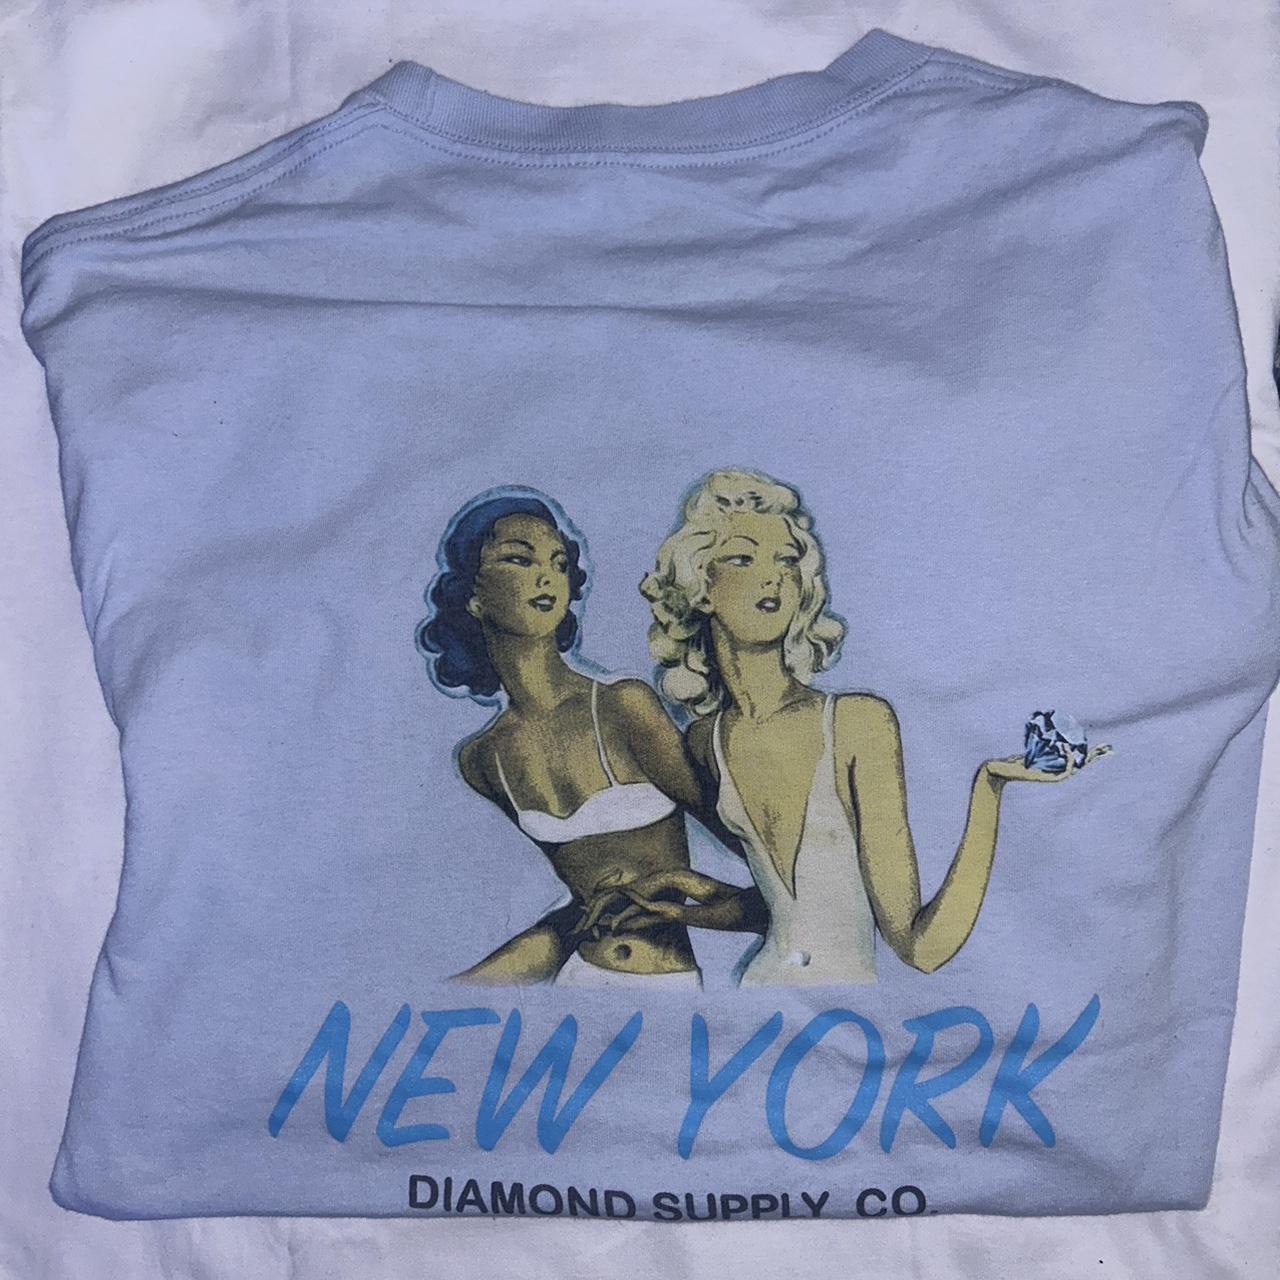 diamond supply co shirts blue